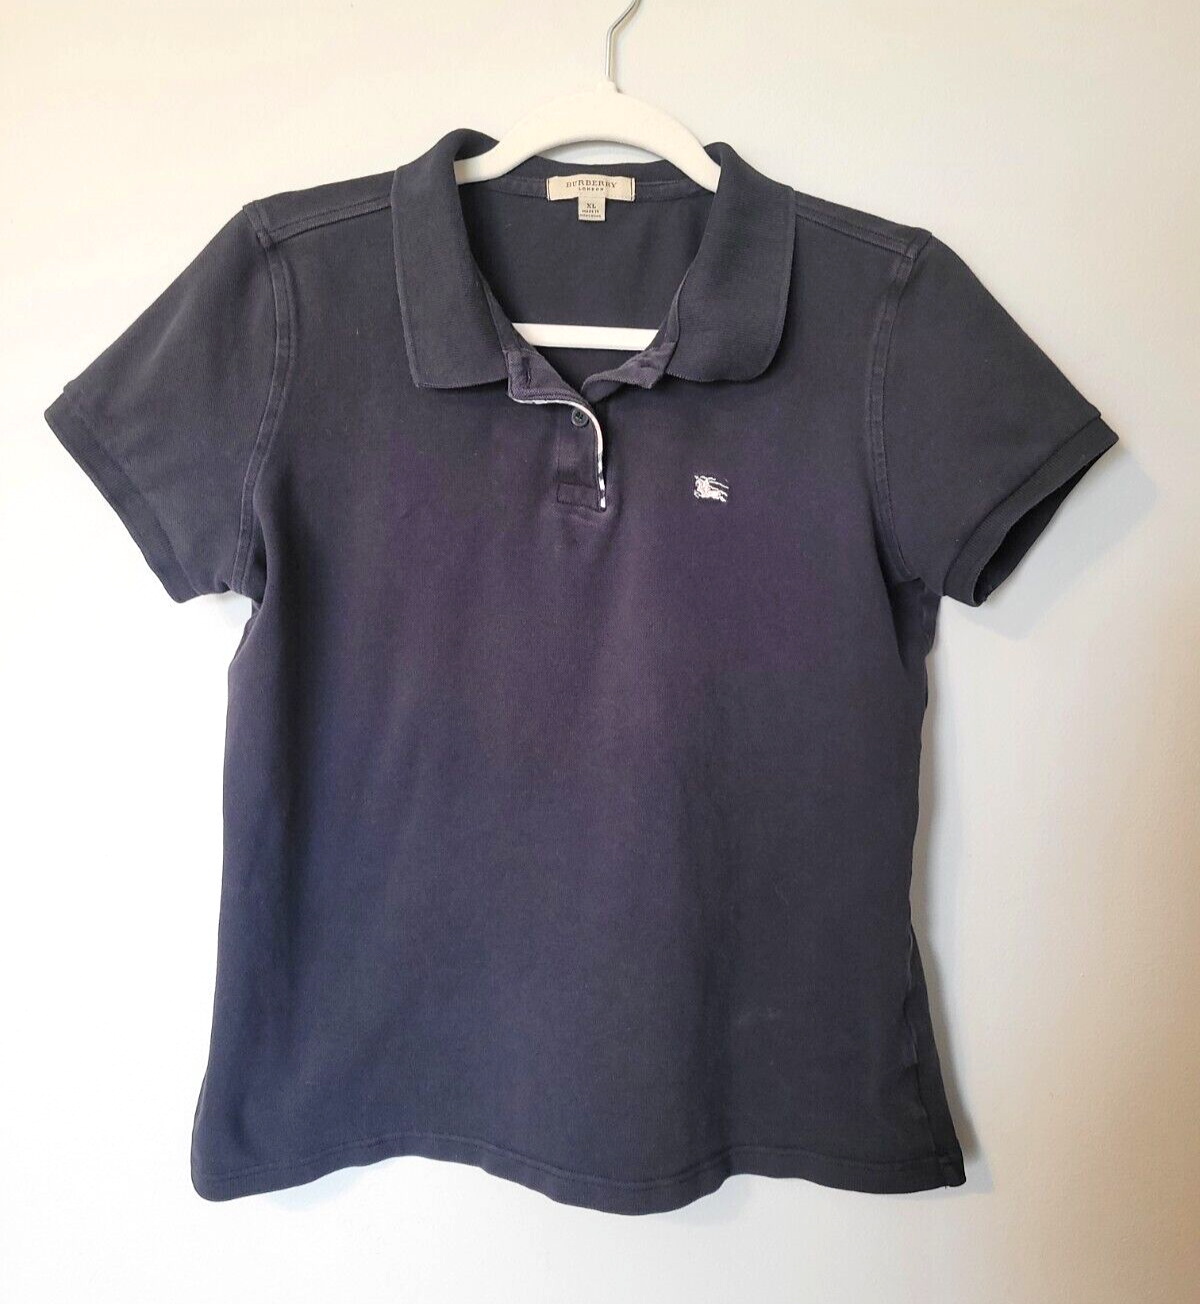 Vintage Burberry Short Sleeve Polo Shirt Boys Size XL Black Made in England - $11.35